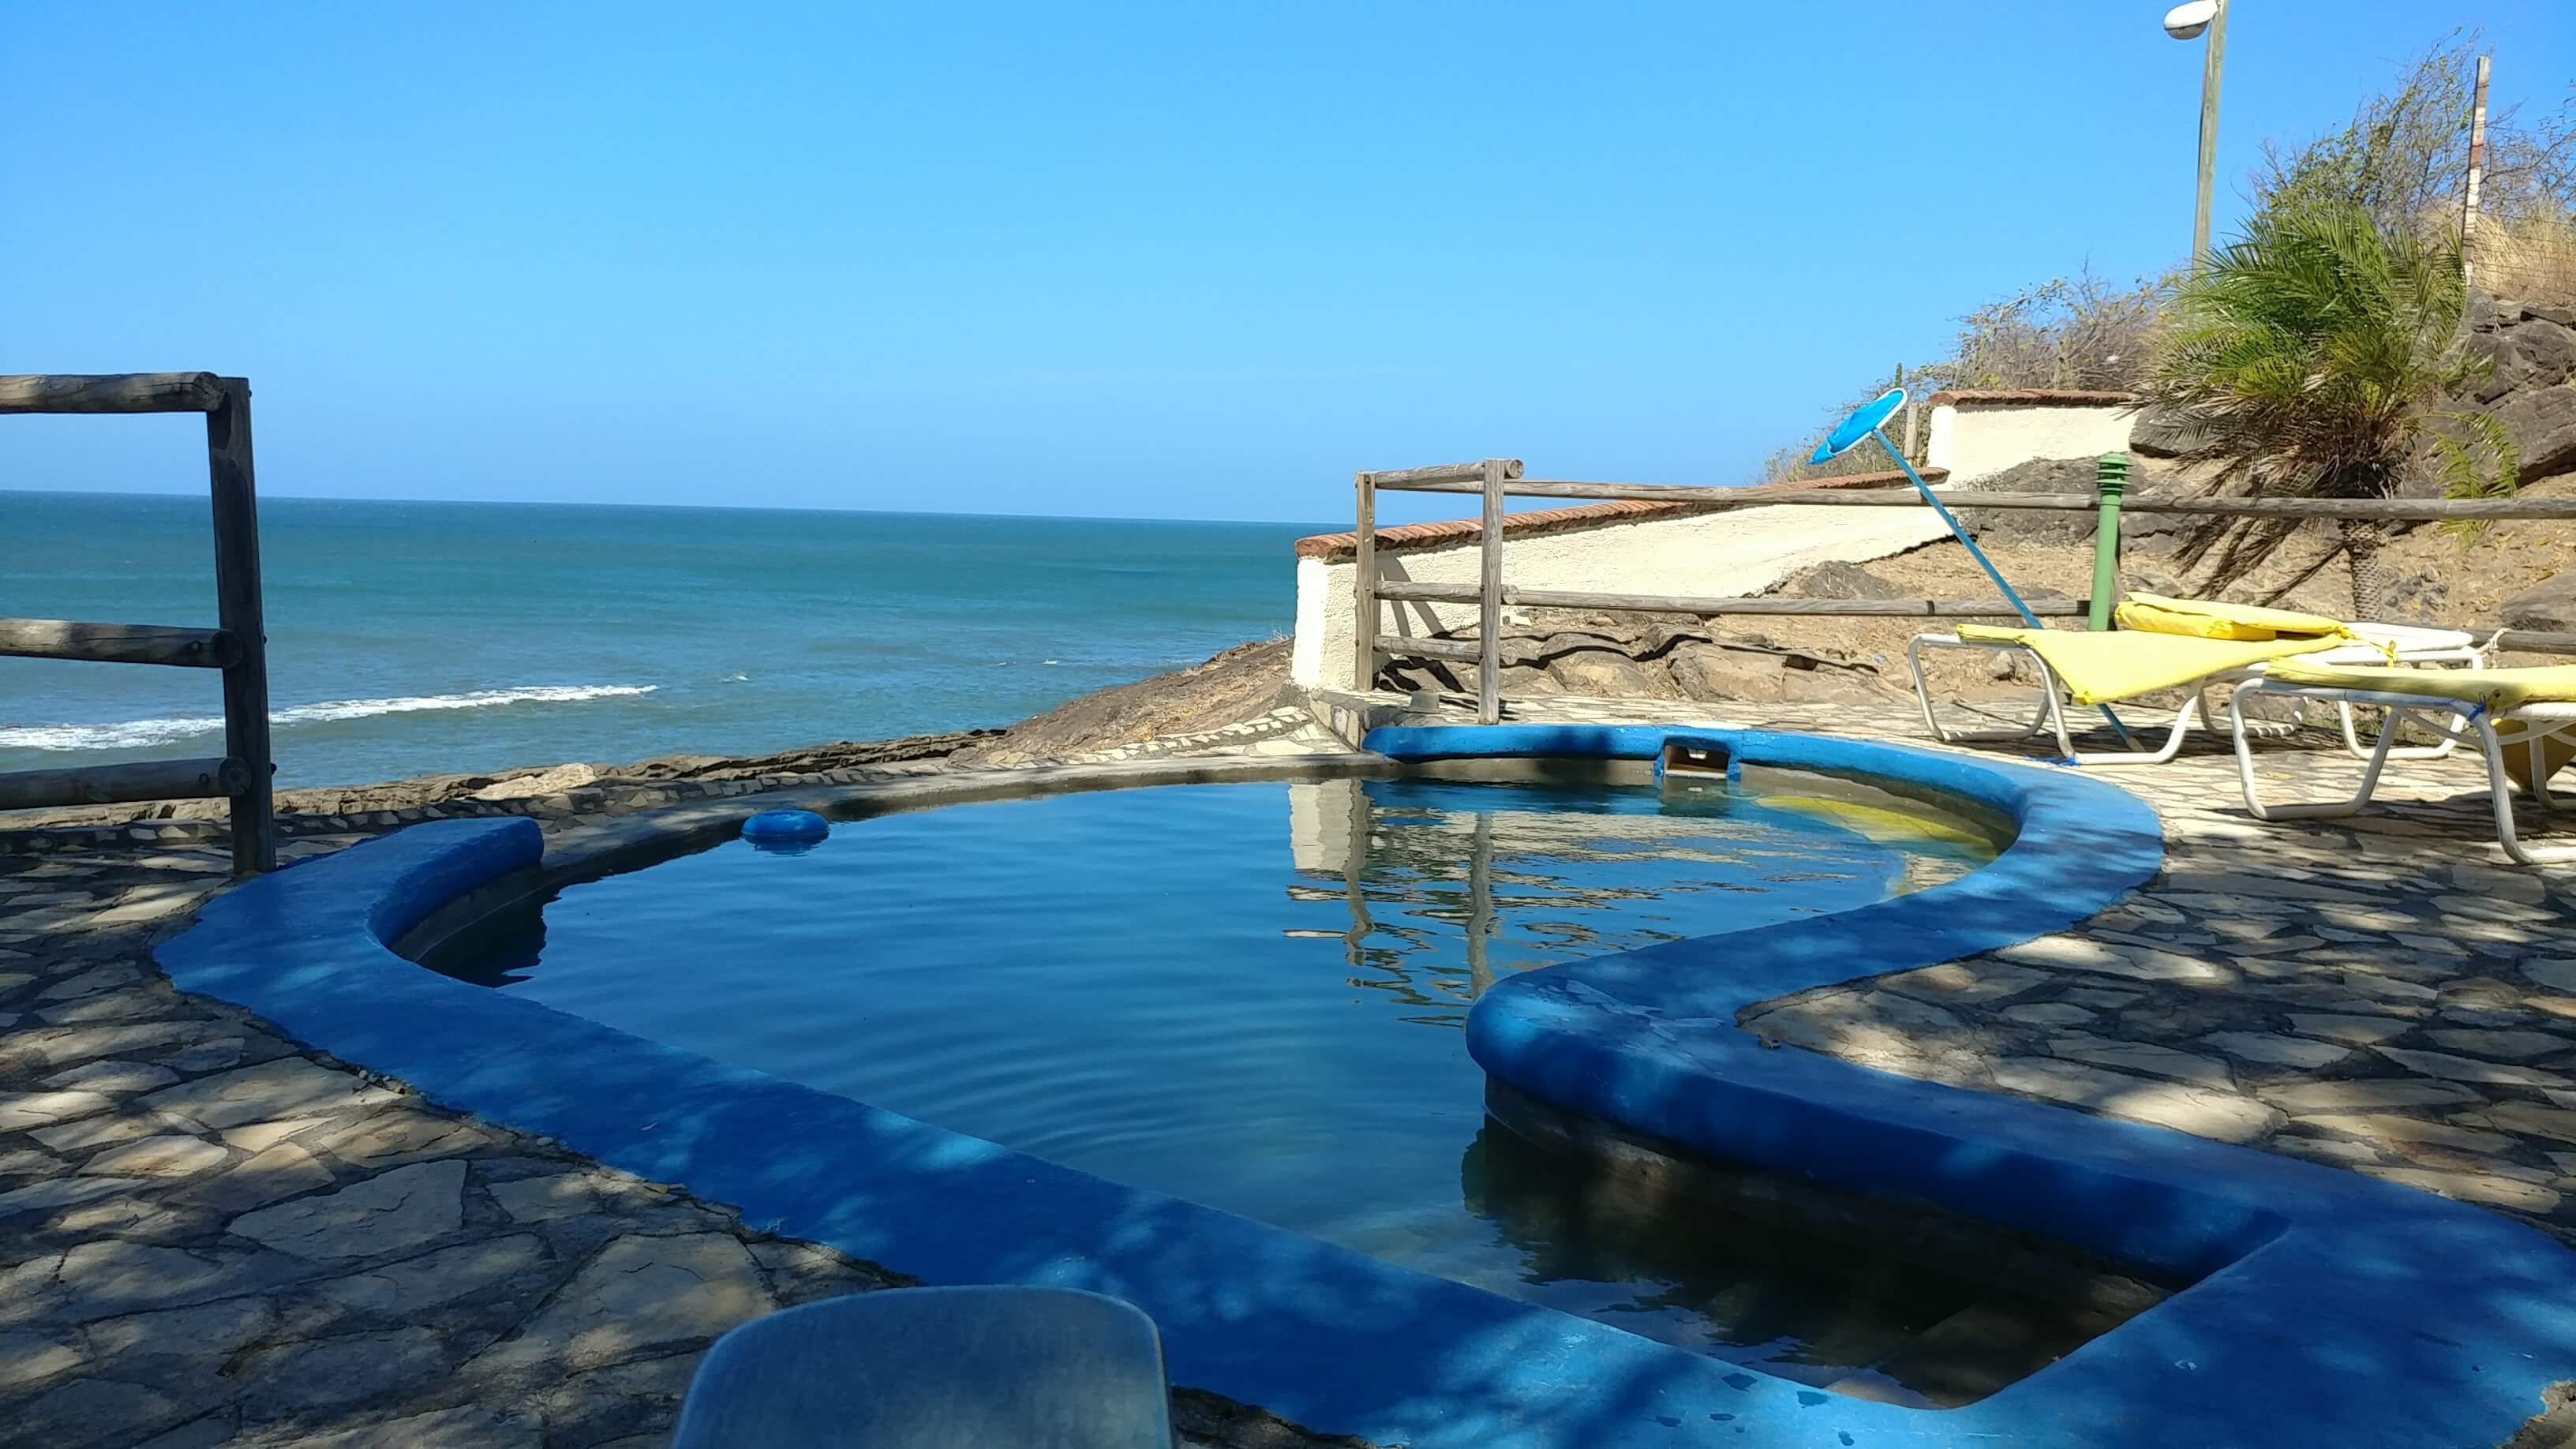 Airbnb Nicaragua beach house